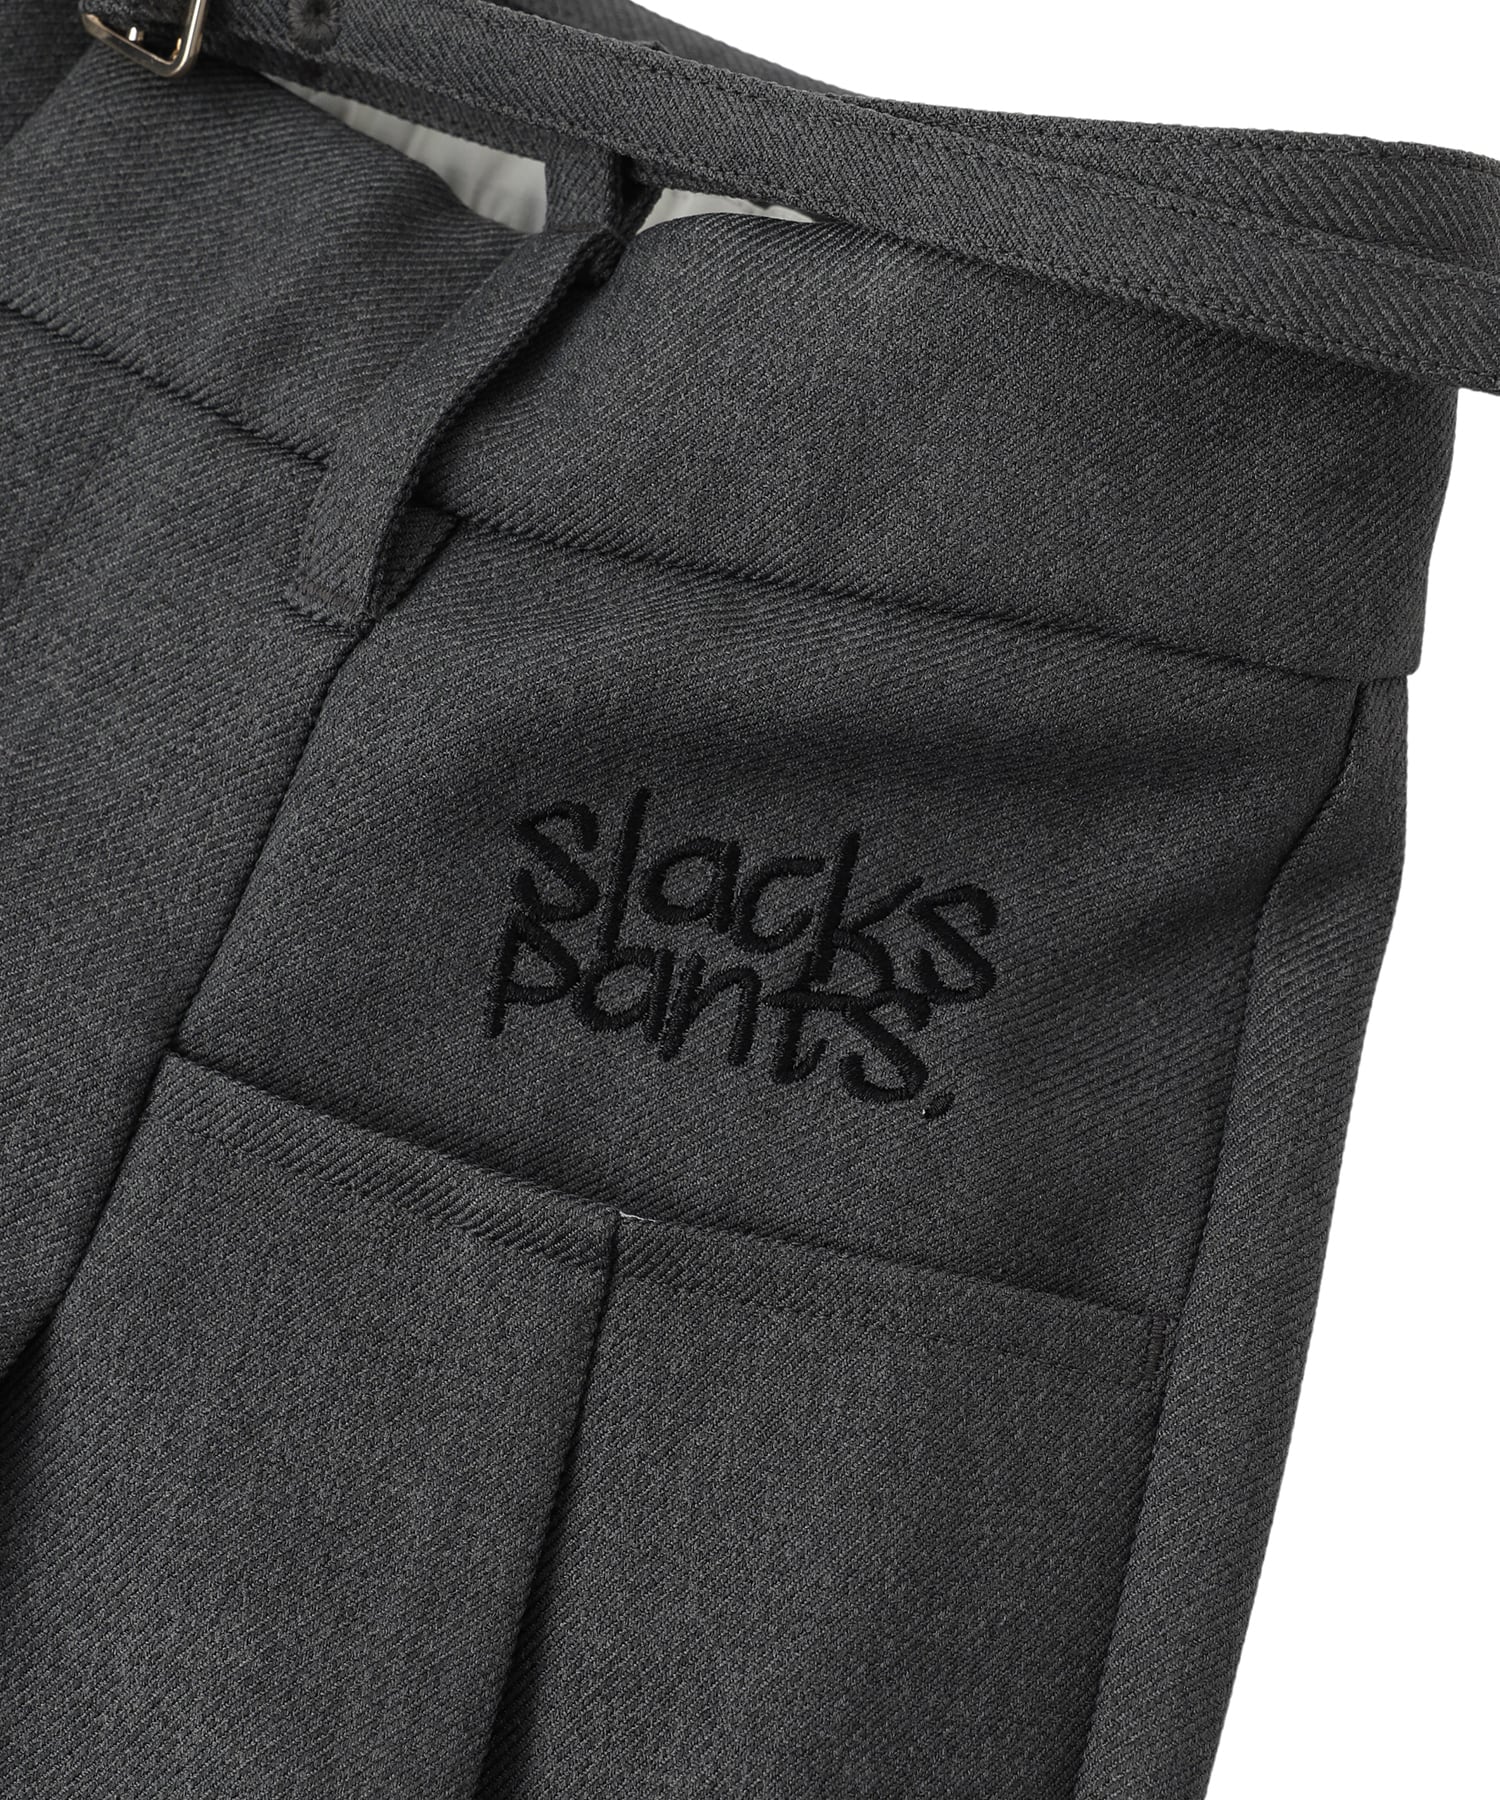 Graffiti tuck slacks pants